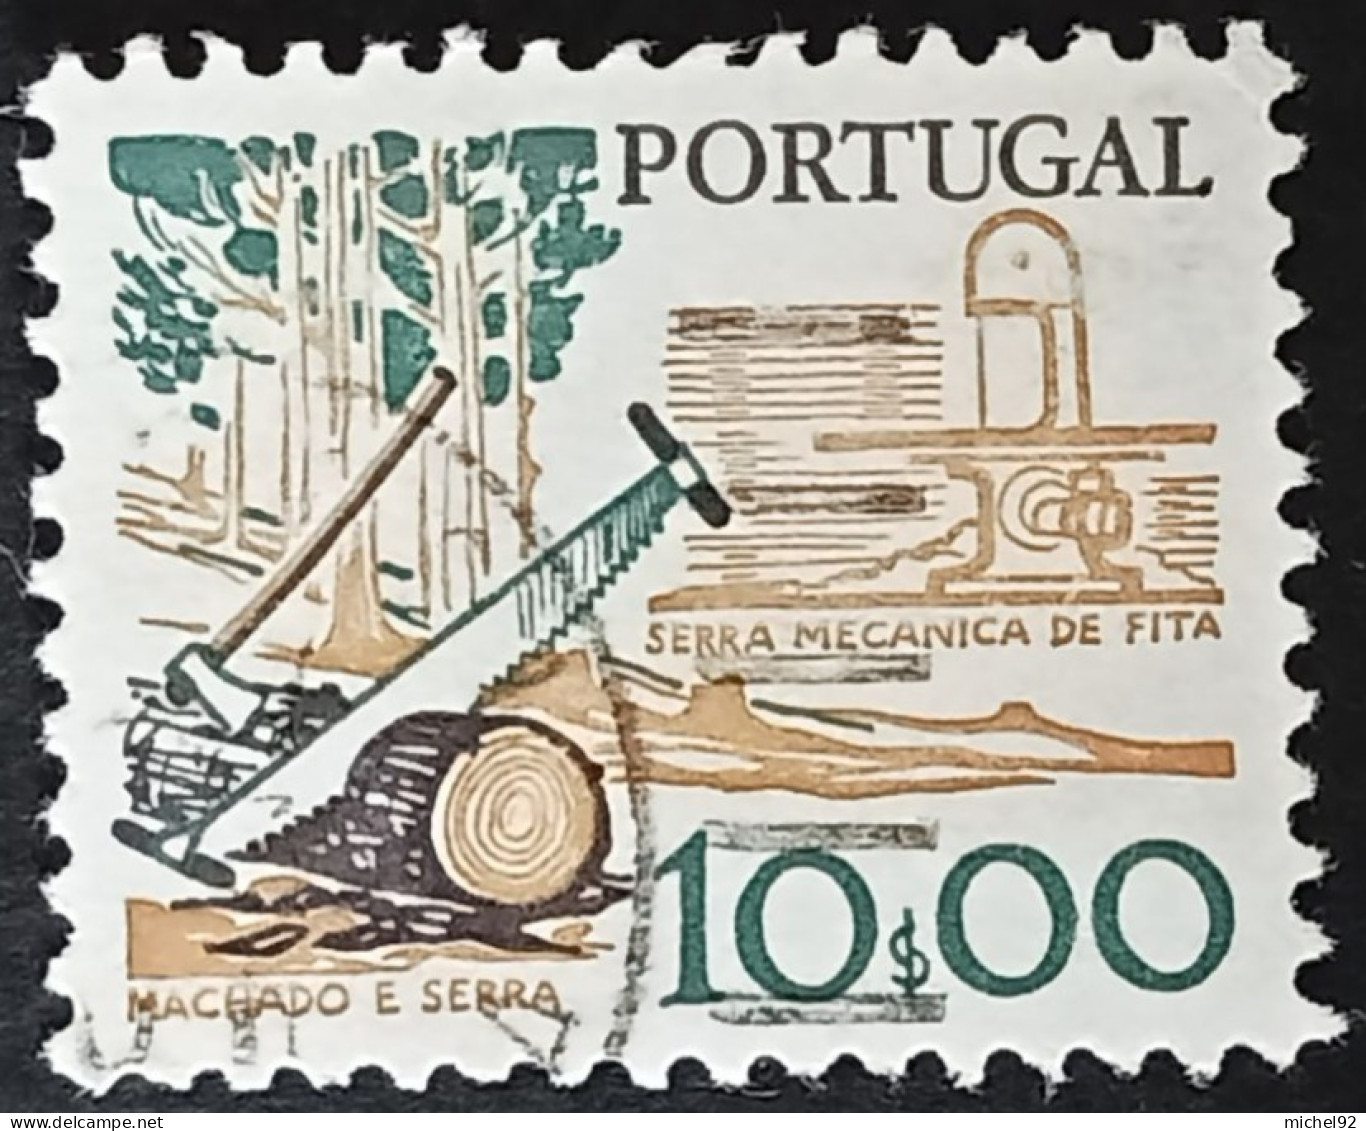 Portugal 1979 - YT N°1410 - Oblitéré - Gebraucht